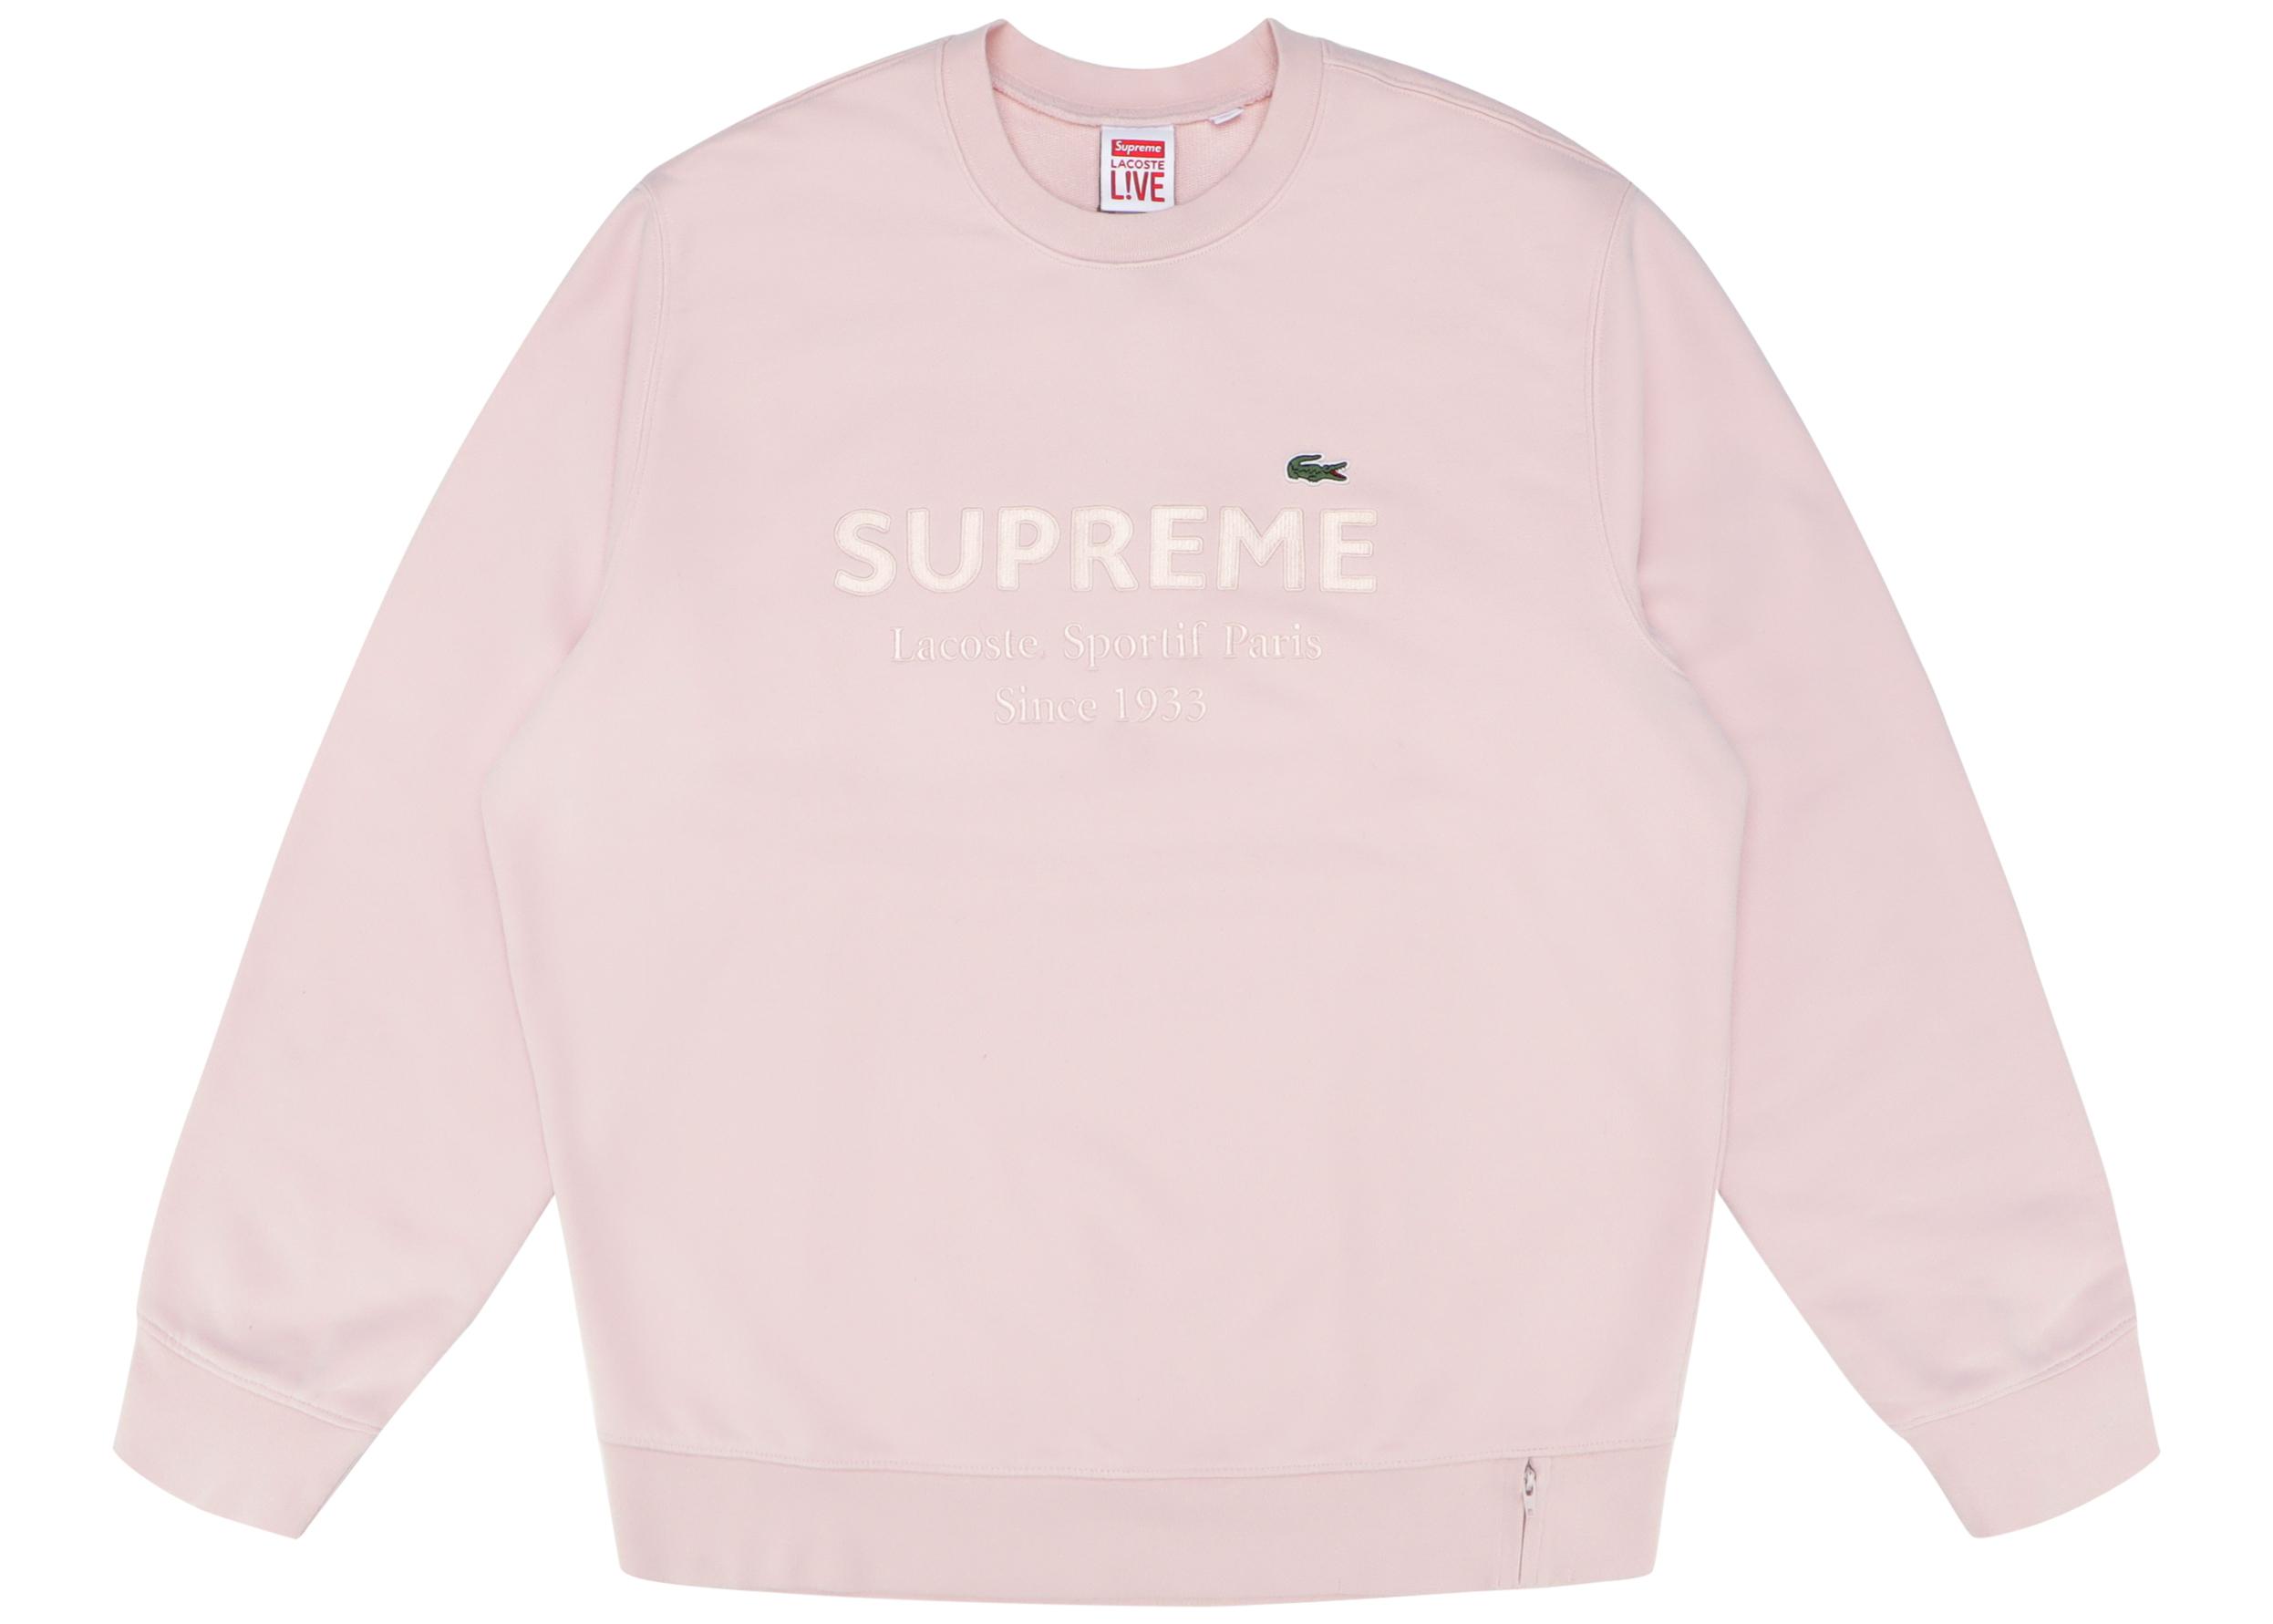 Shopping \u003e supreme lacoste sweater, Up 